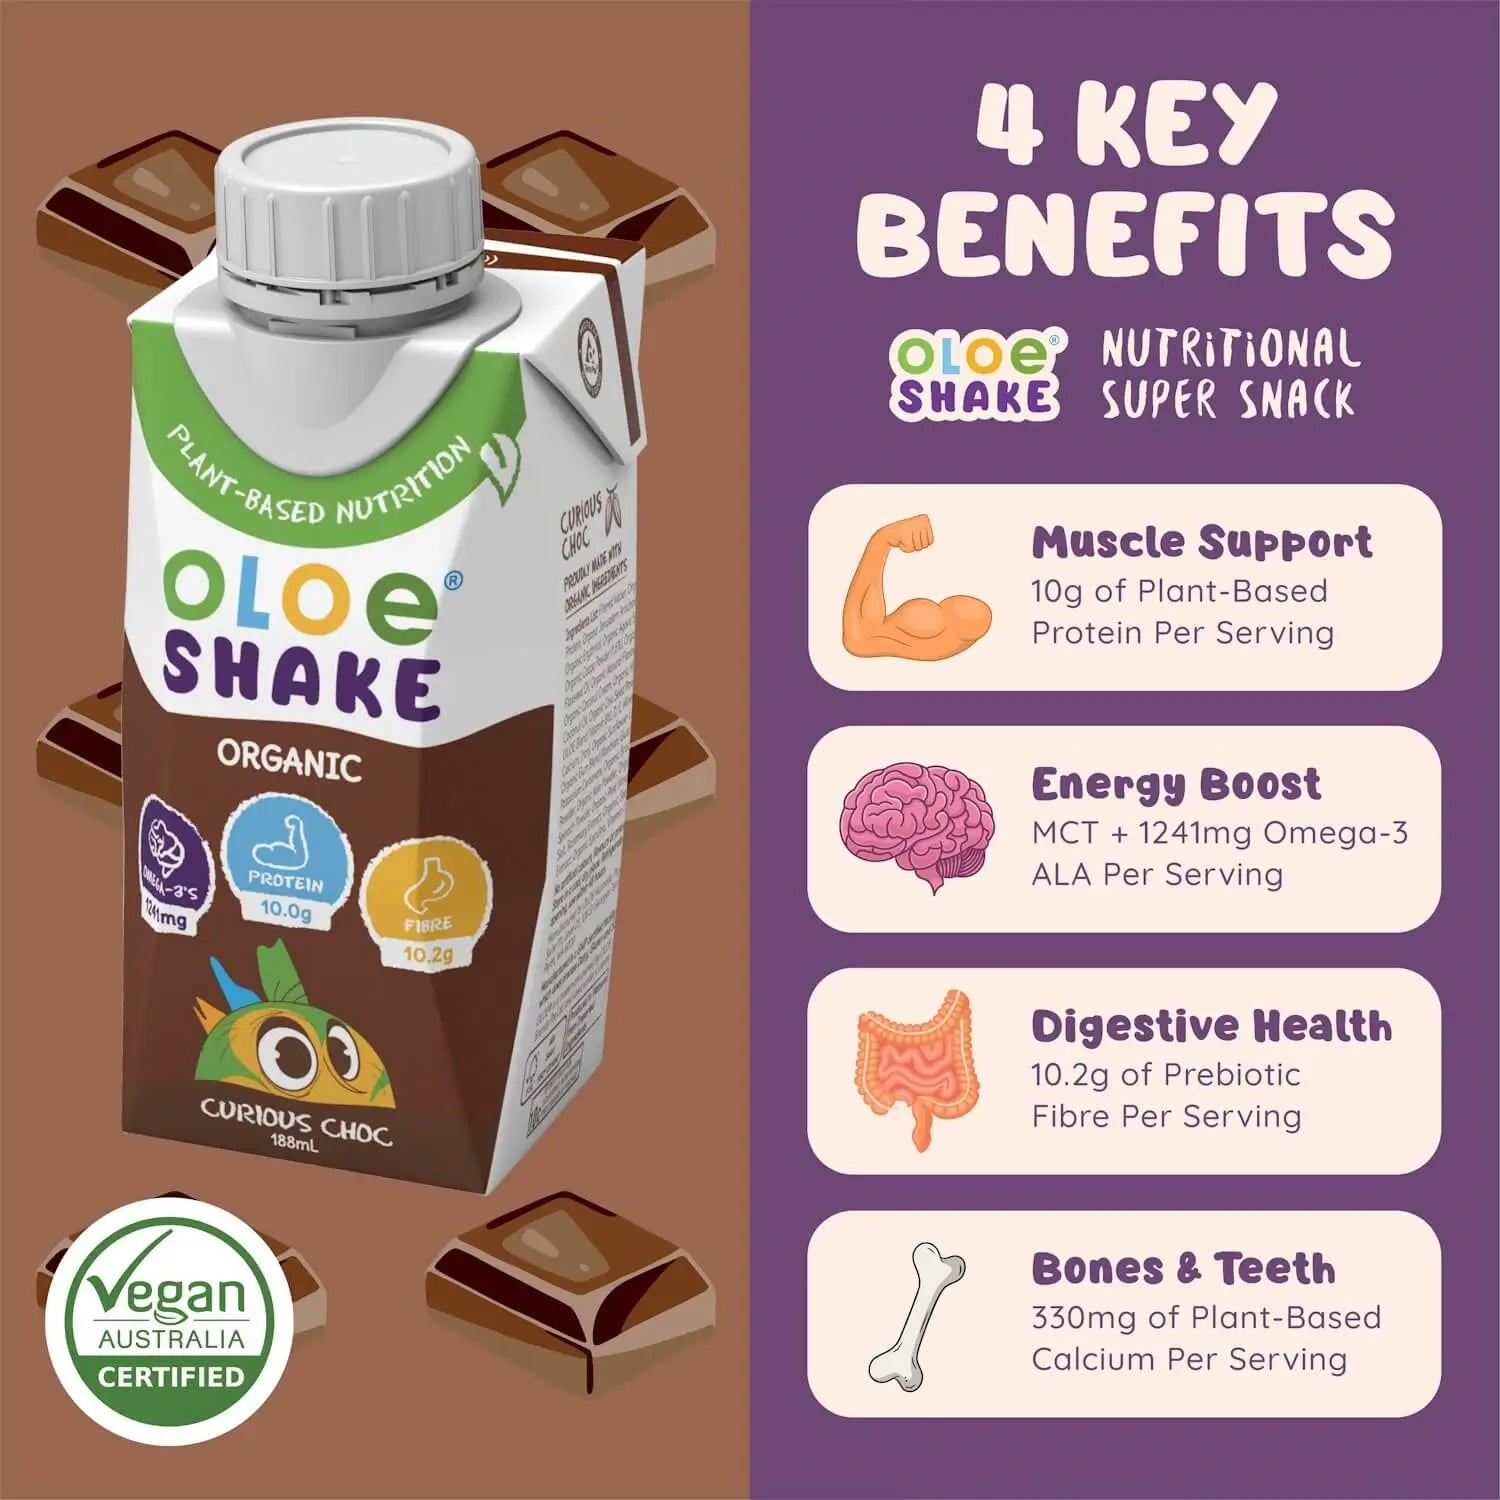 oloe-shake-curious-choc-4-key-benefits